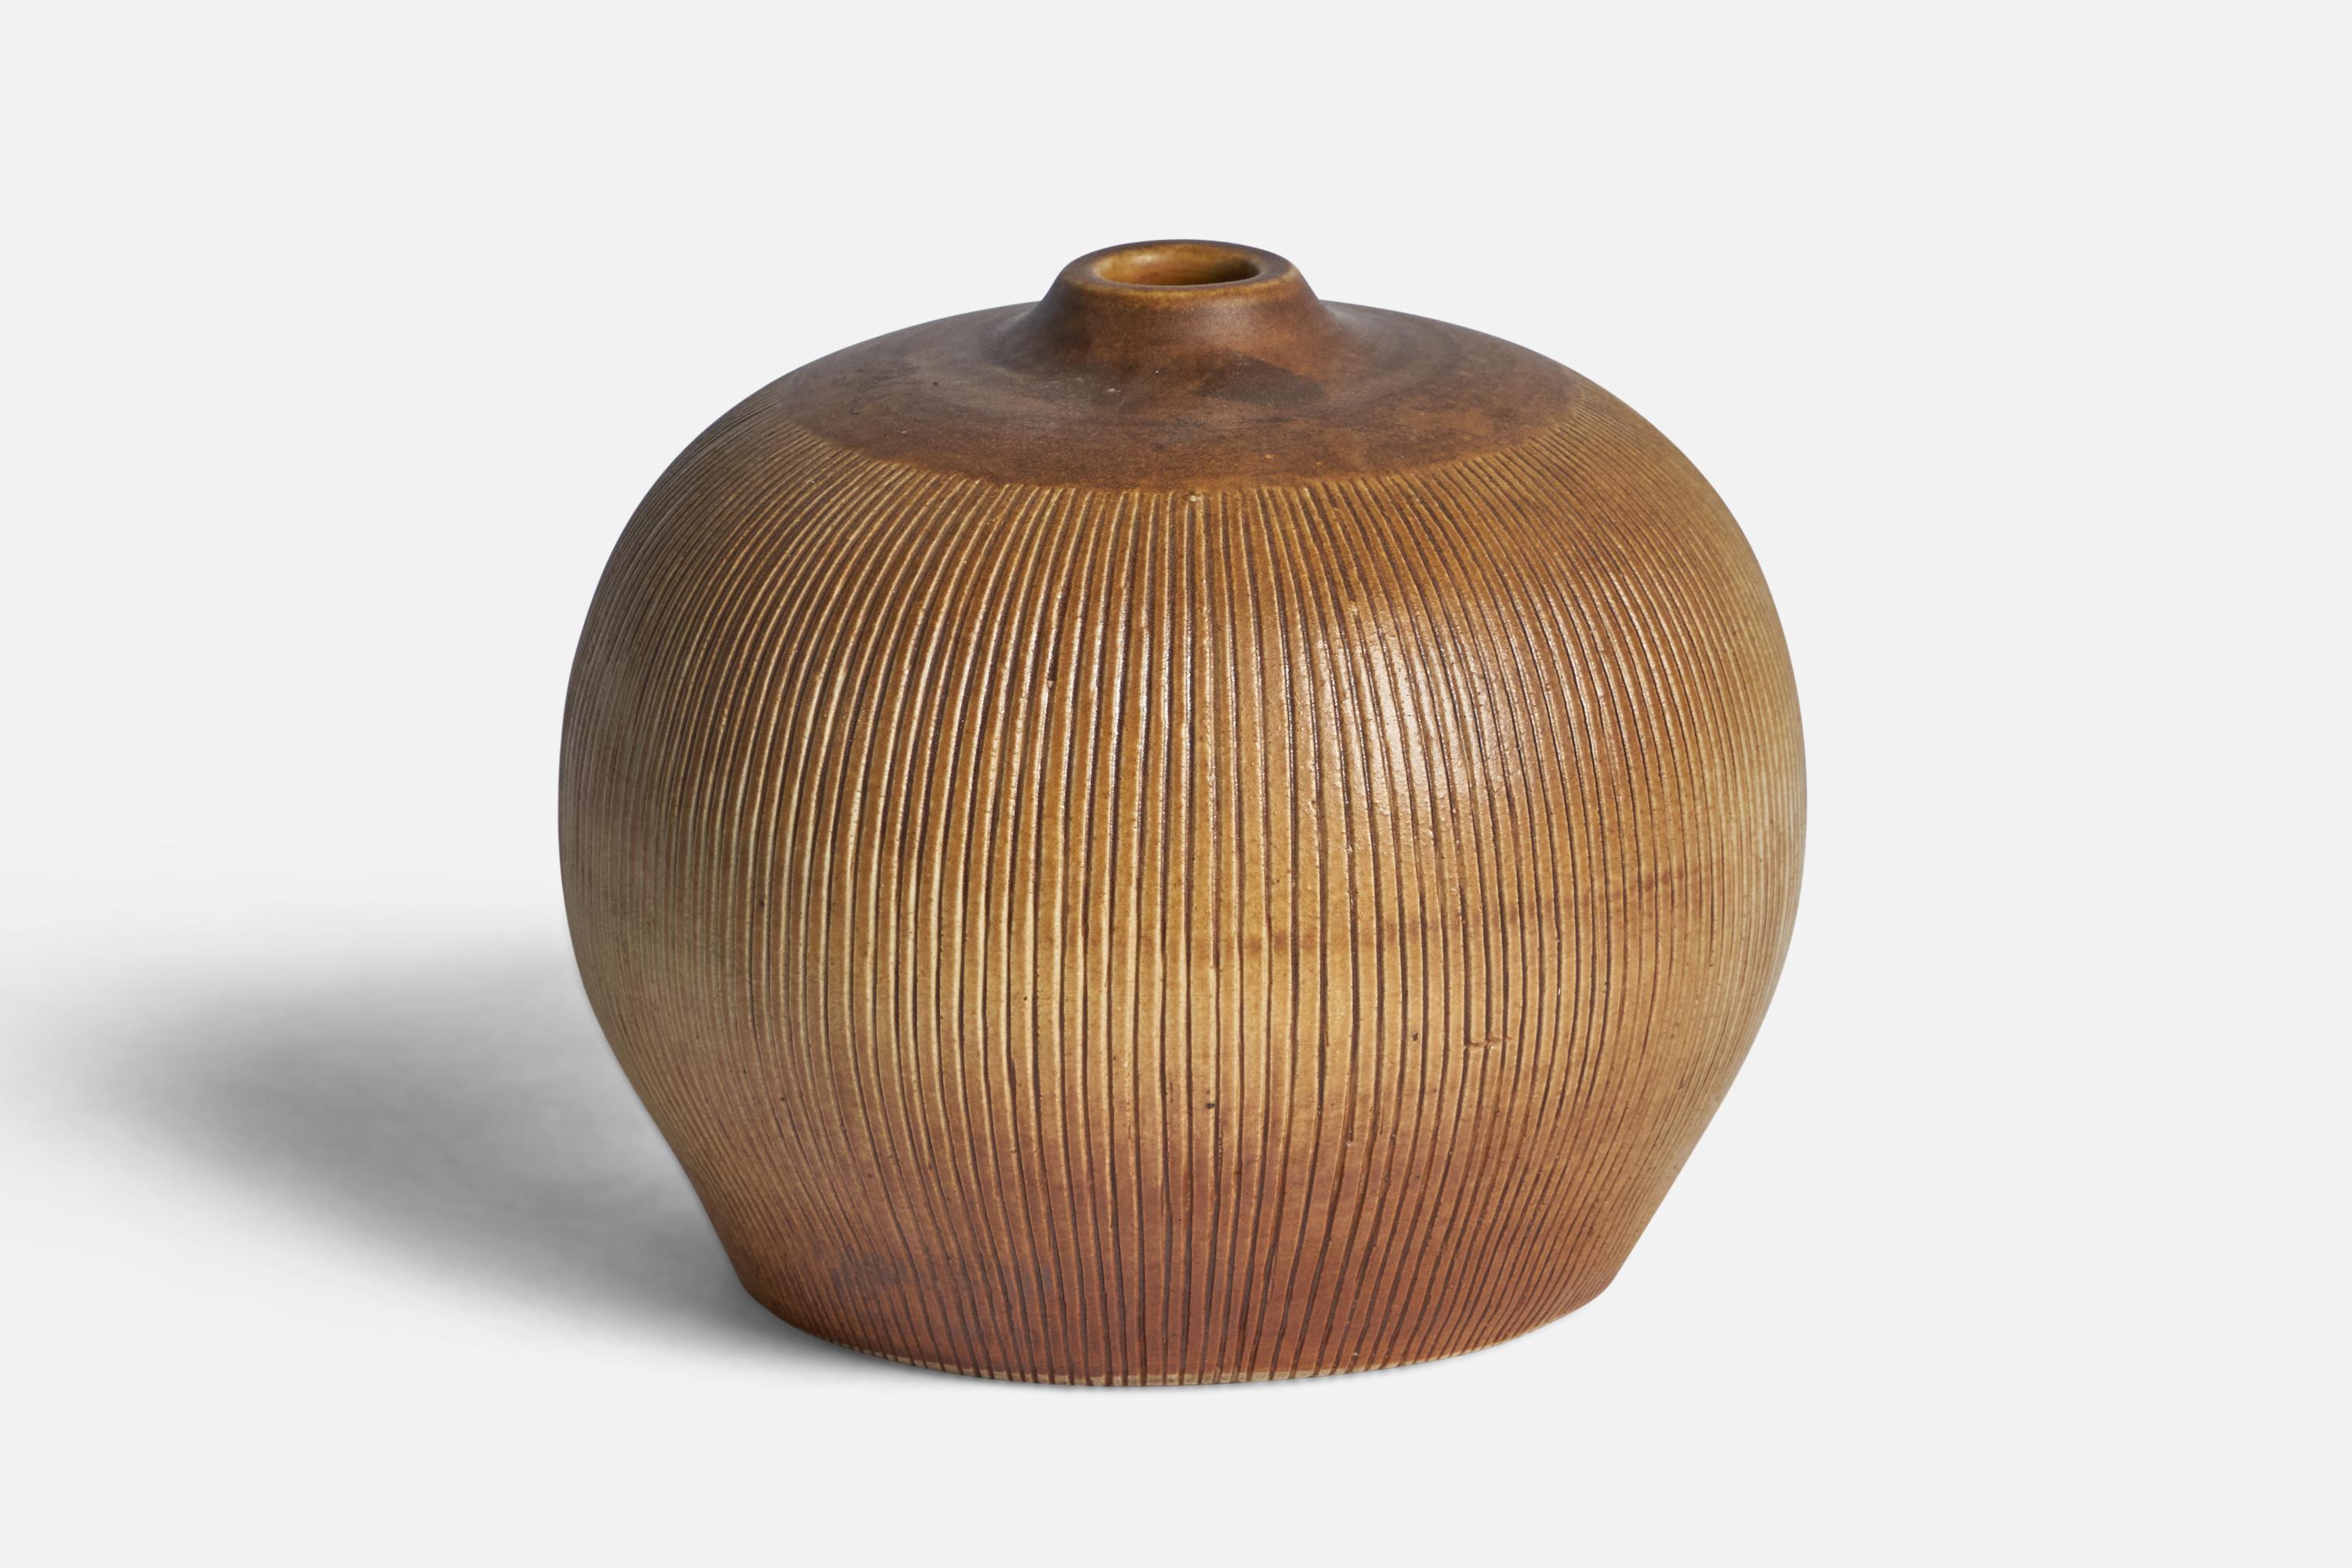 An incised brown-glazed earthenware vase designed and produced by Edgar Böckman, Sweden, 1930s.